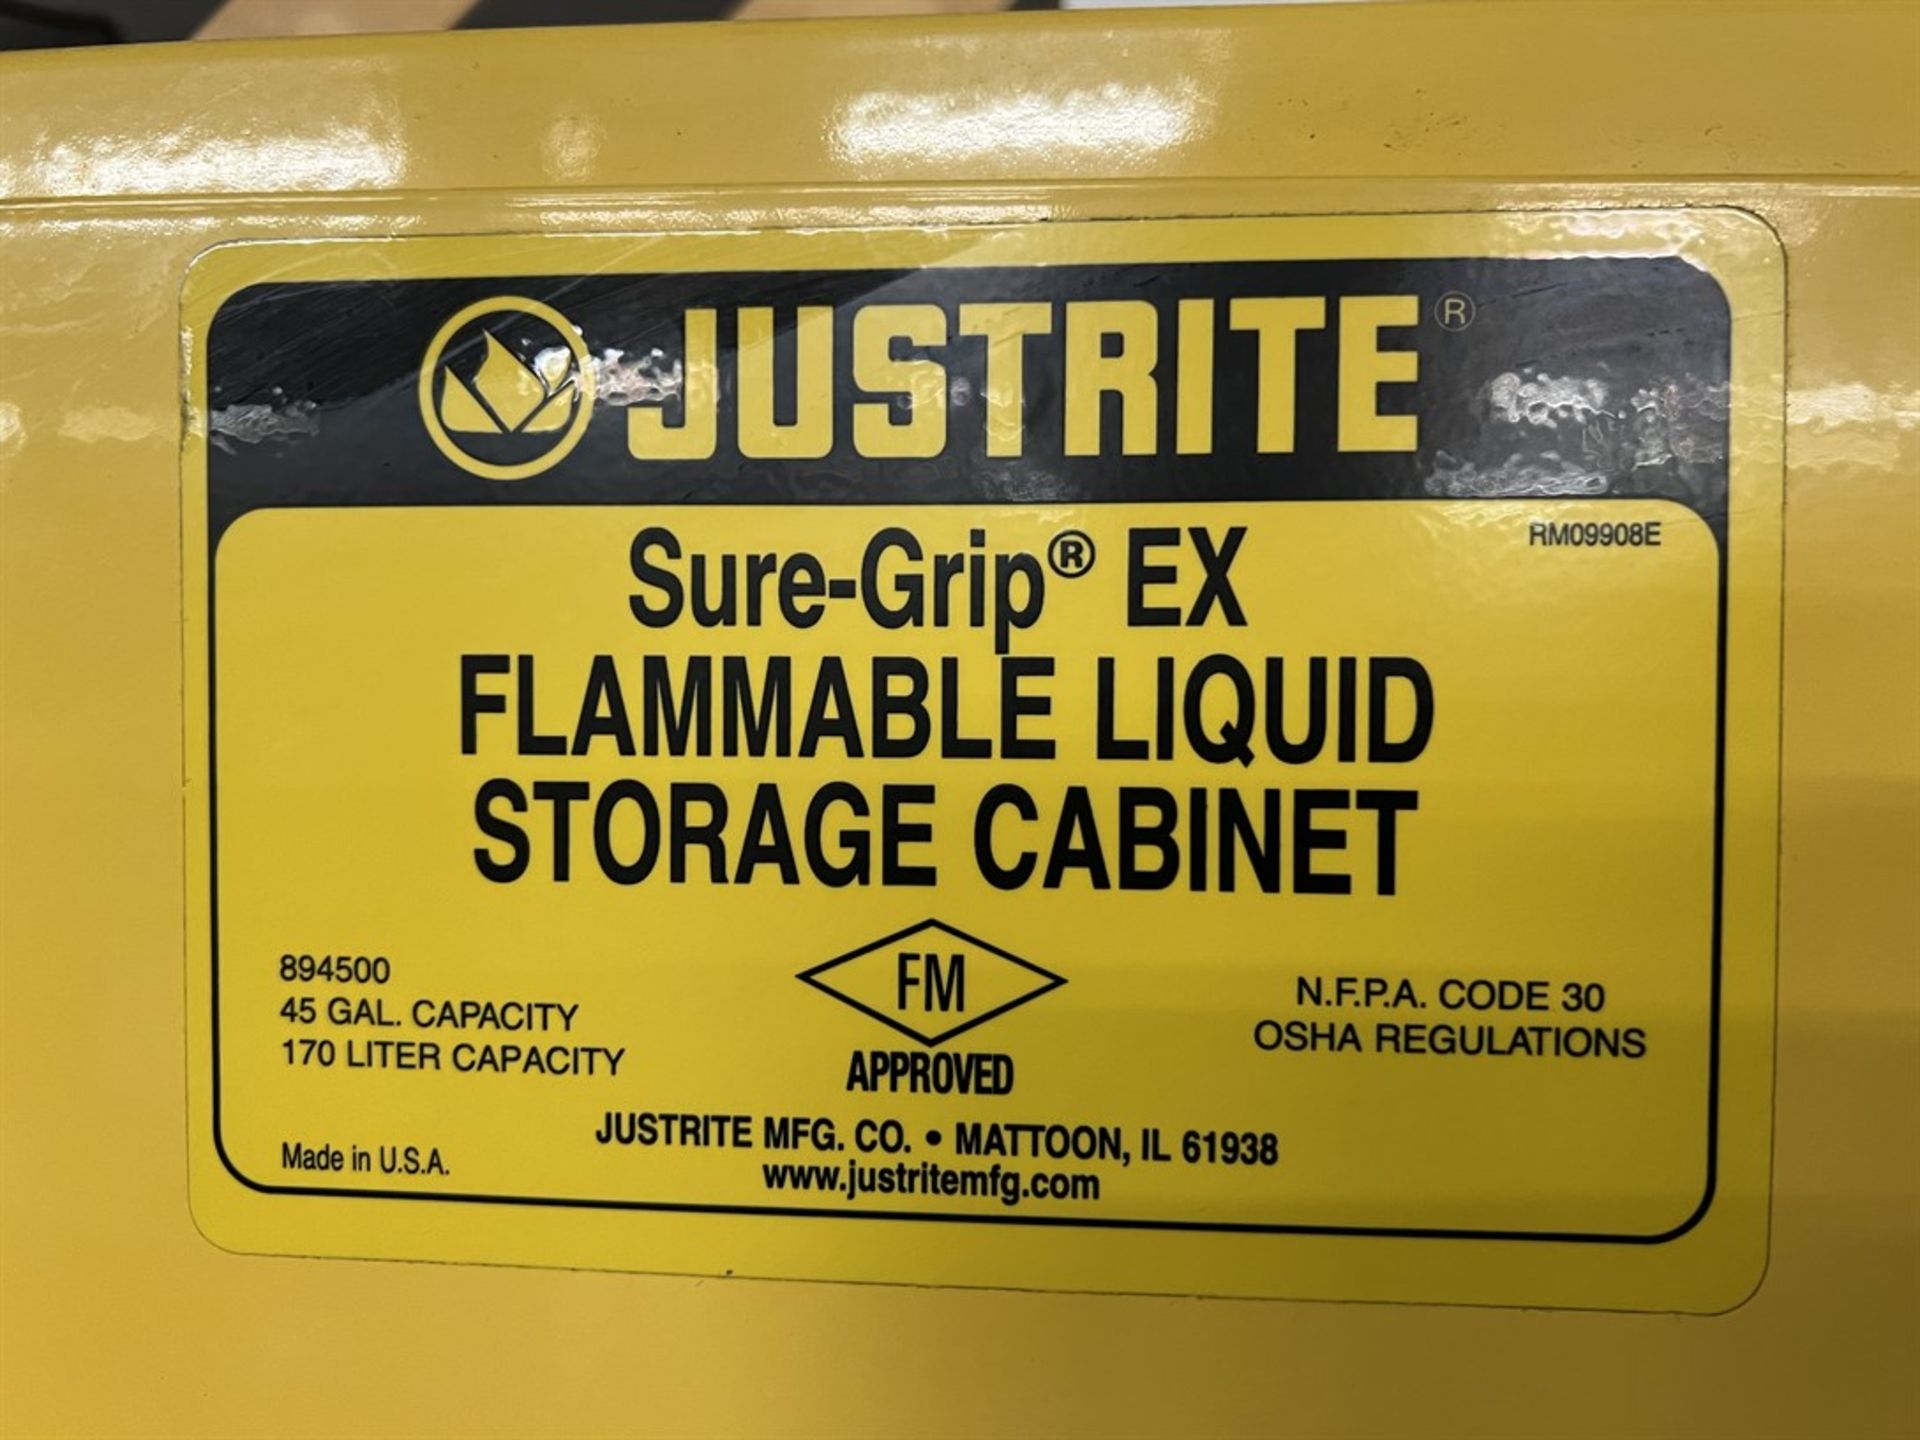 JUSTRITE Sure Grip EX 894500 45 Gallon Capacity Flammable Liquids Storage Cabinet - Image 2 of 2